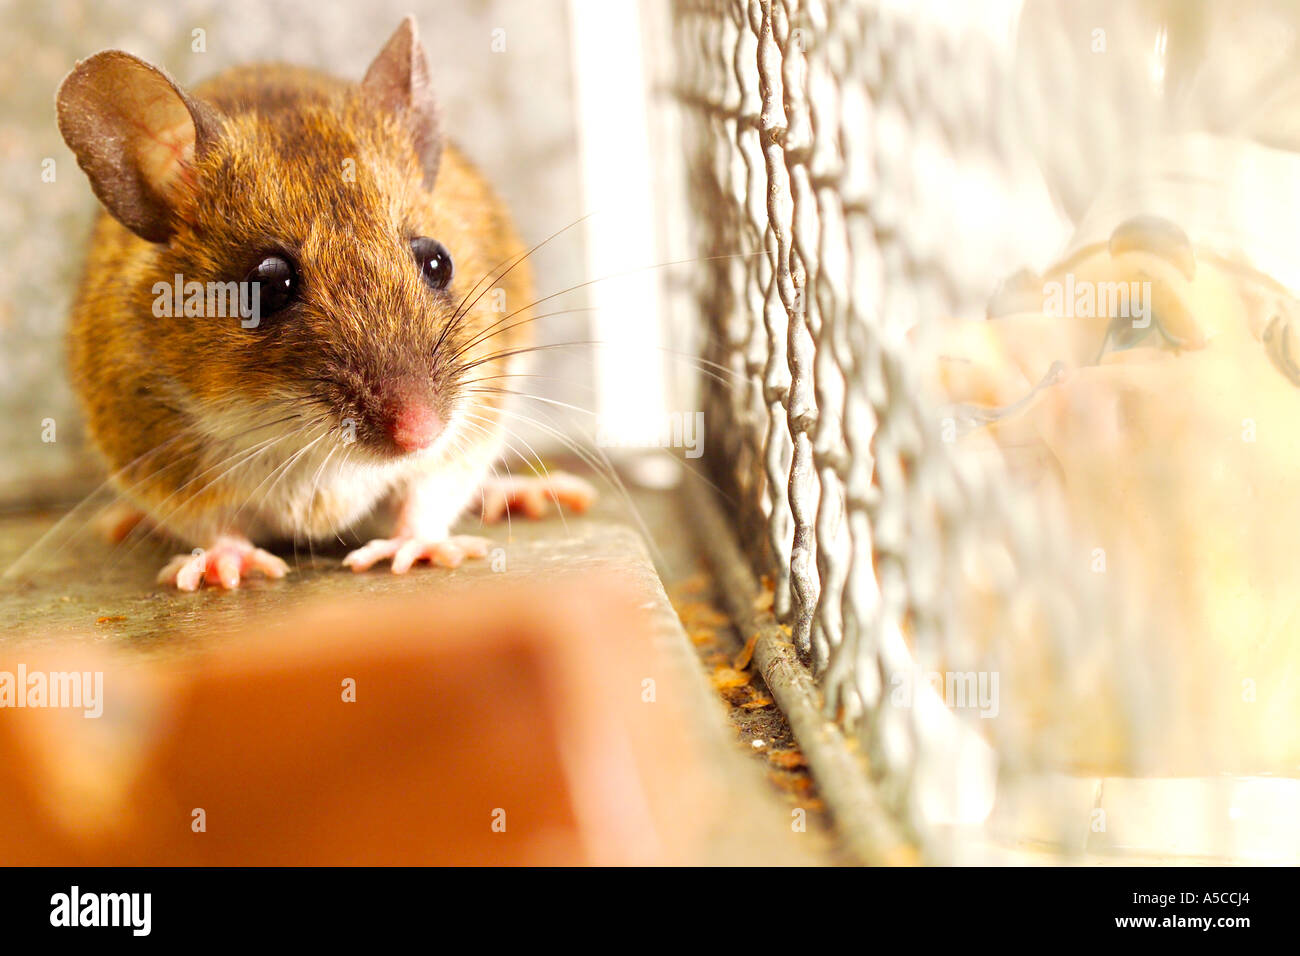 Ratón en una jaula Foto de stock